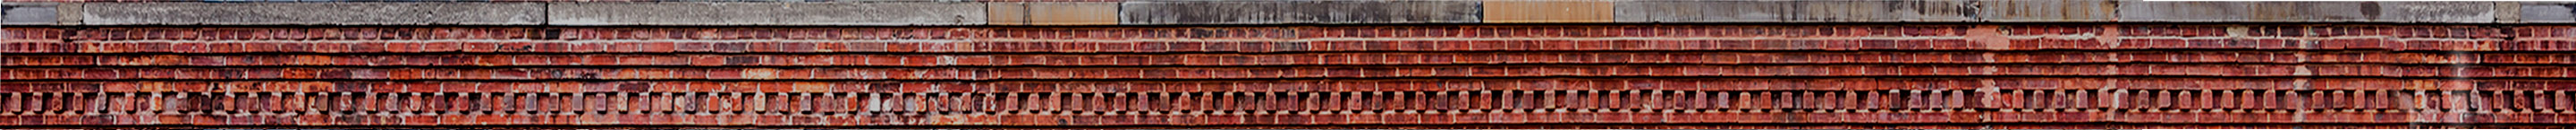 brick exterior roof